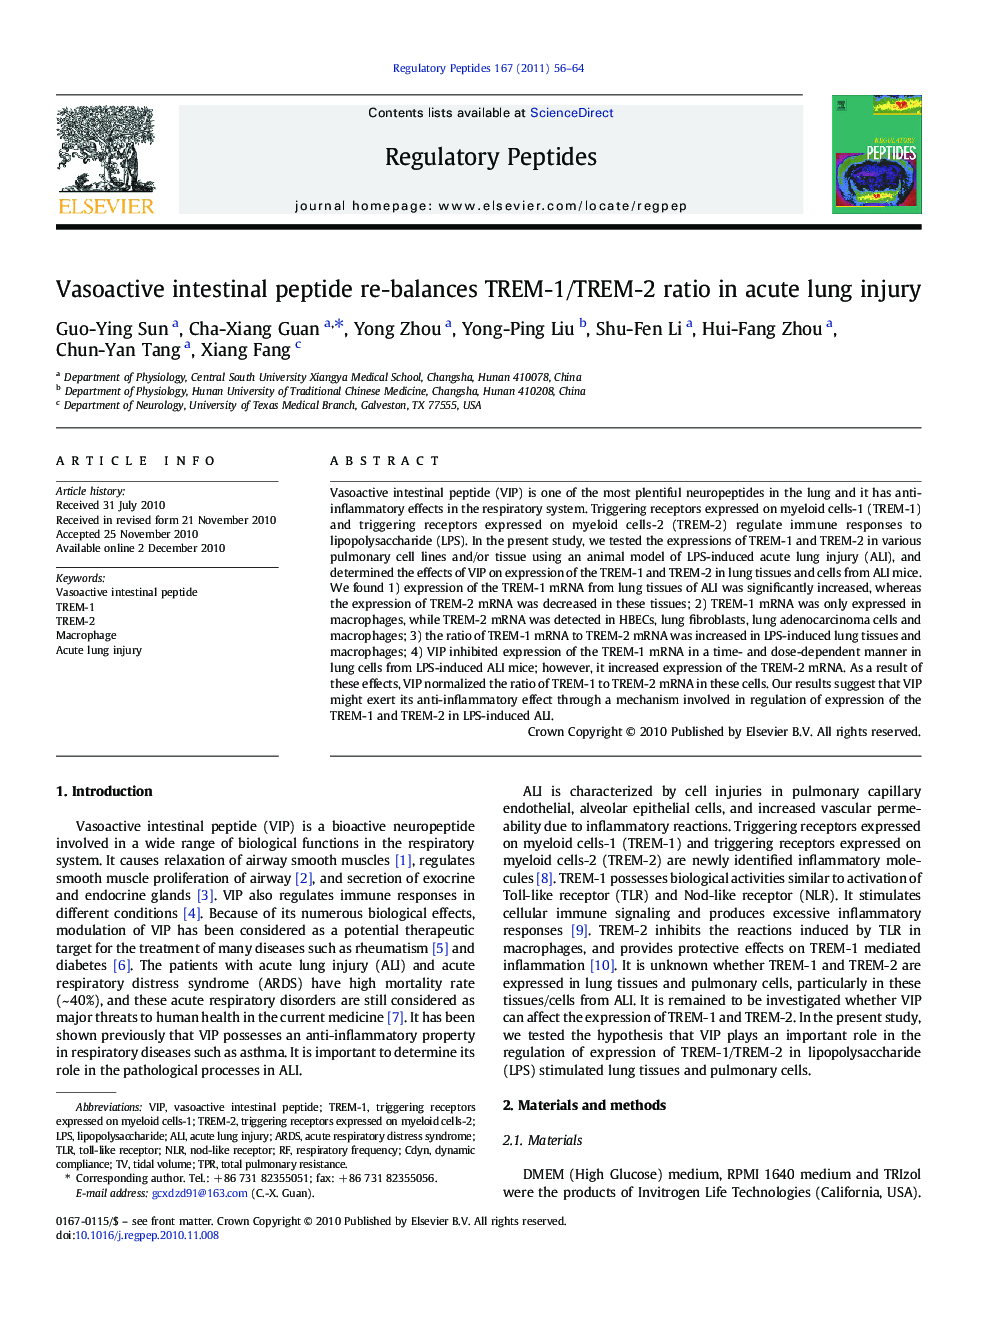 Vasoactive intestinal peptide re-balances TREM-1/TREM-2 ratio in acute lung injury